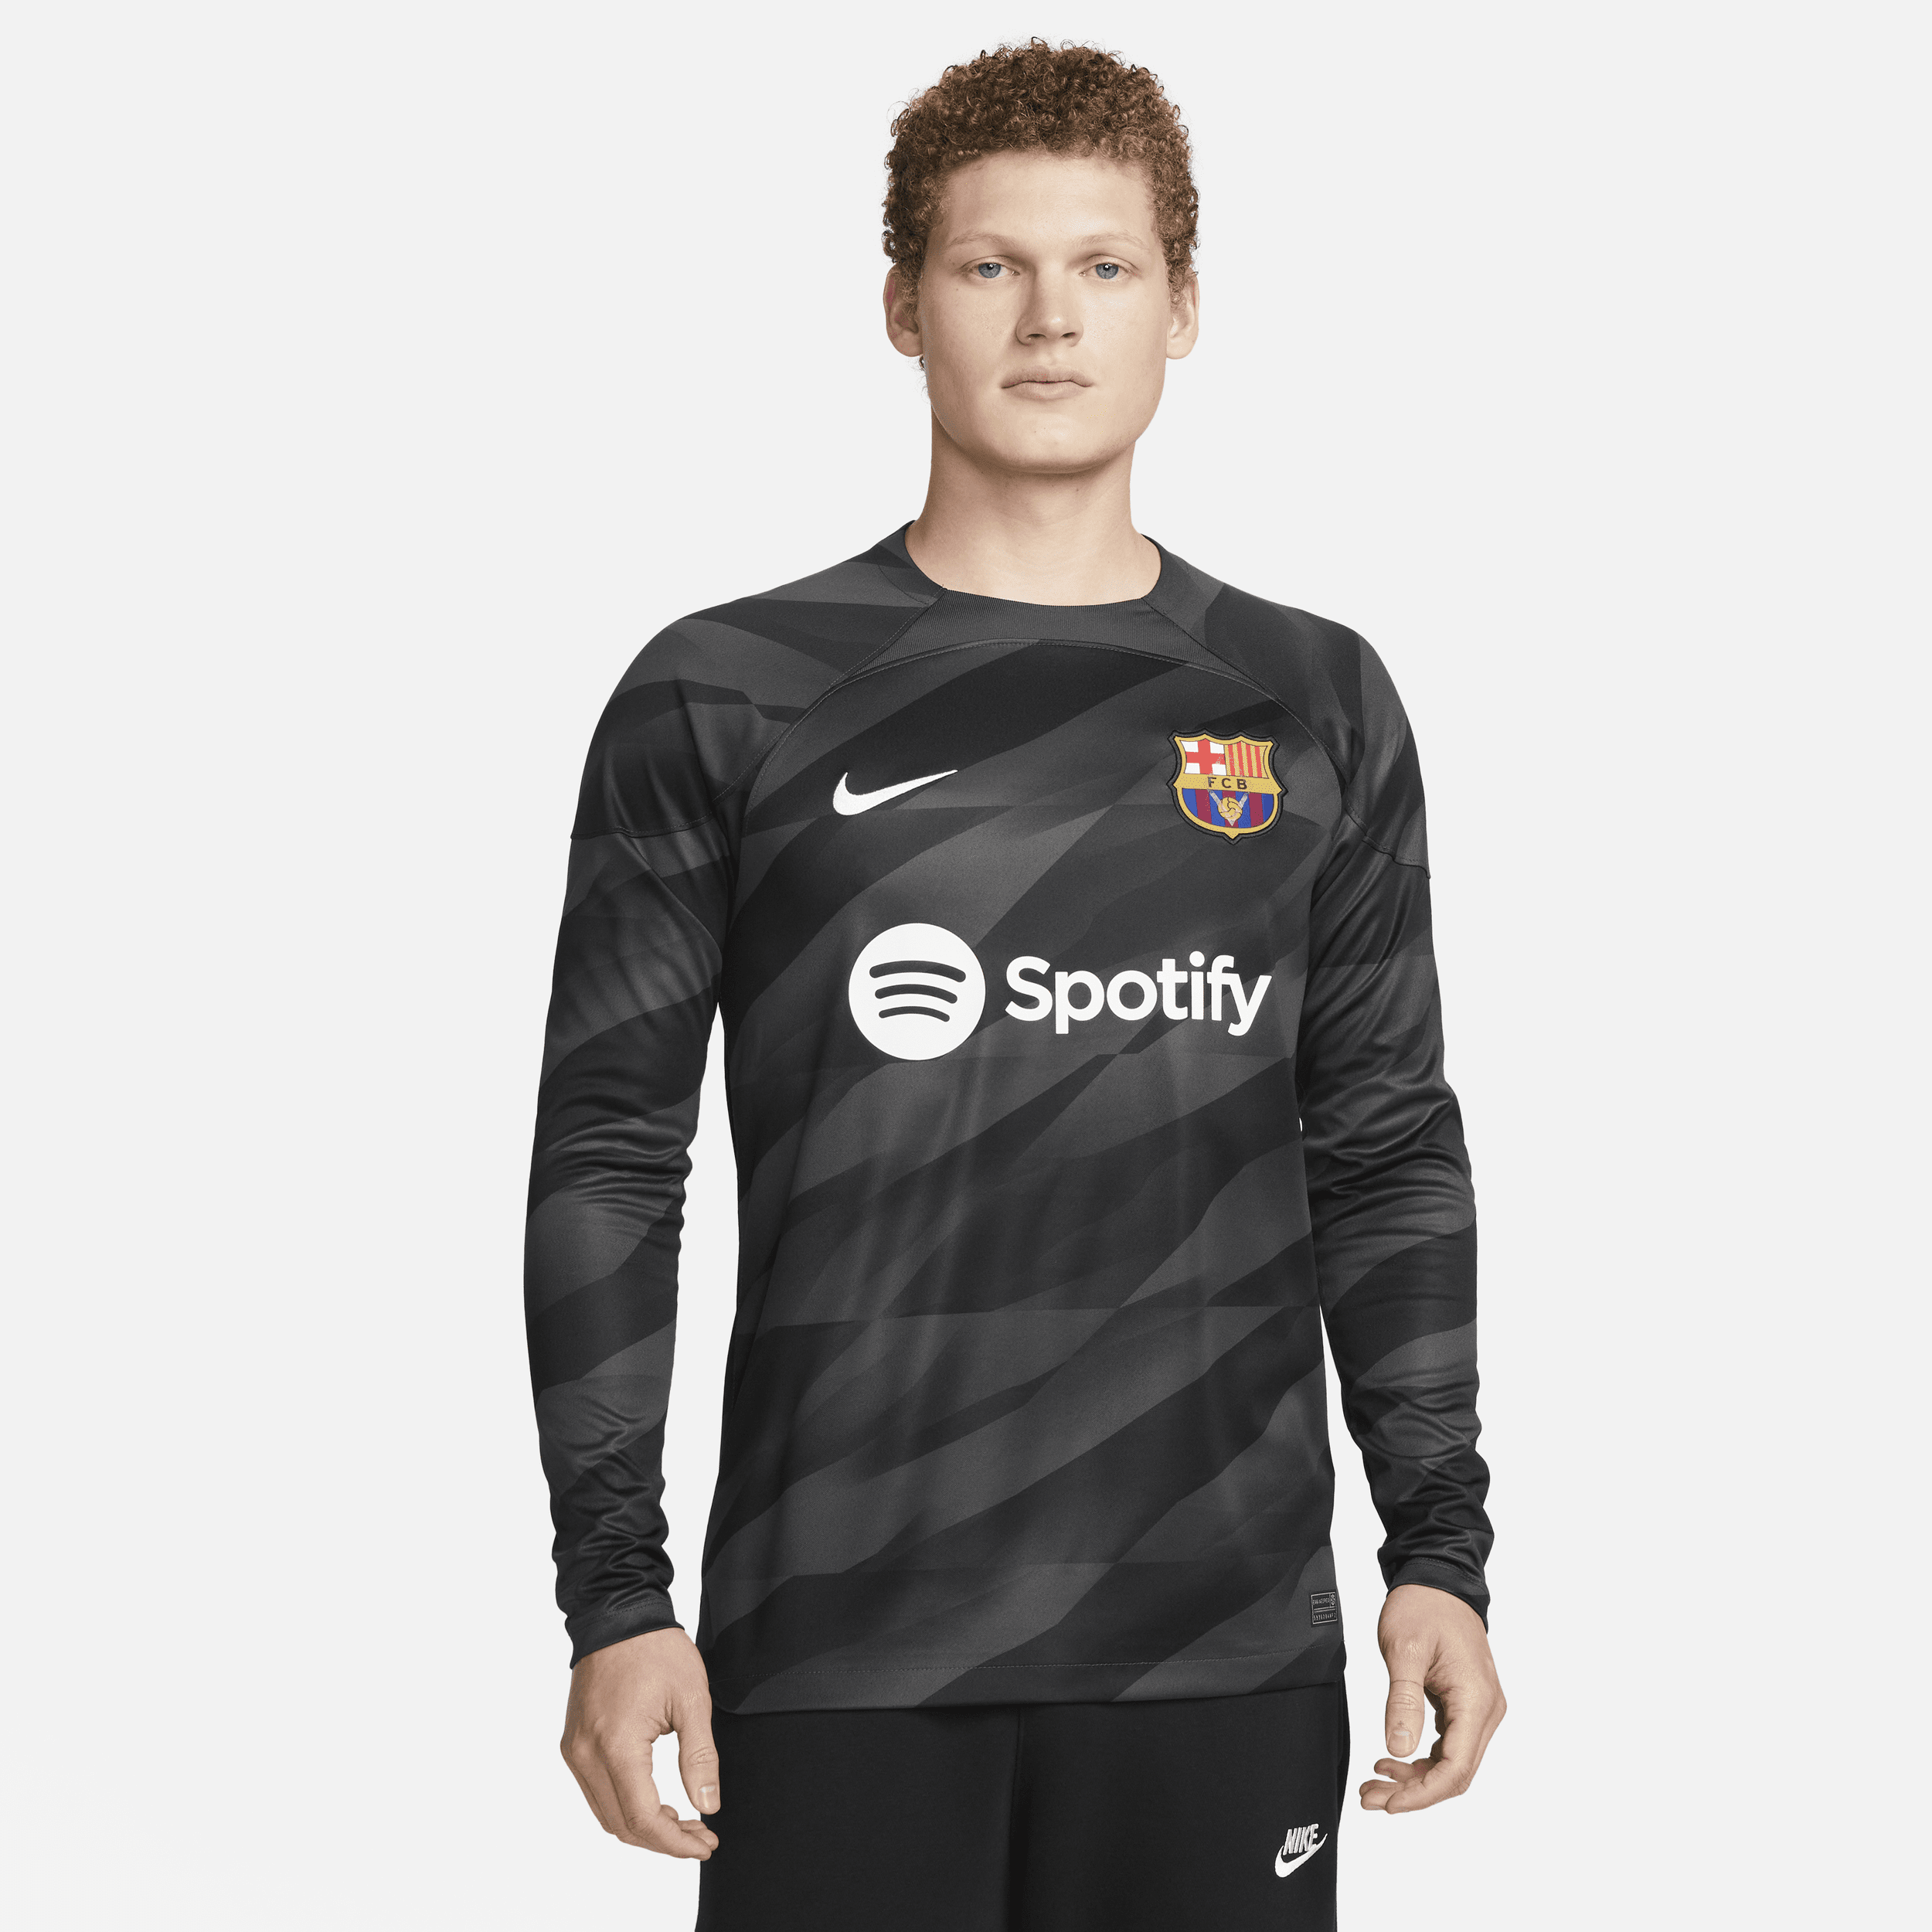 fc barcelona stadium jersey